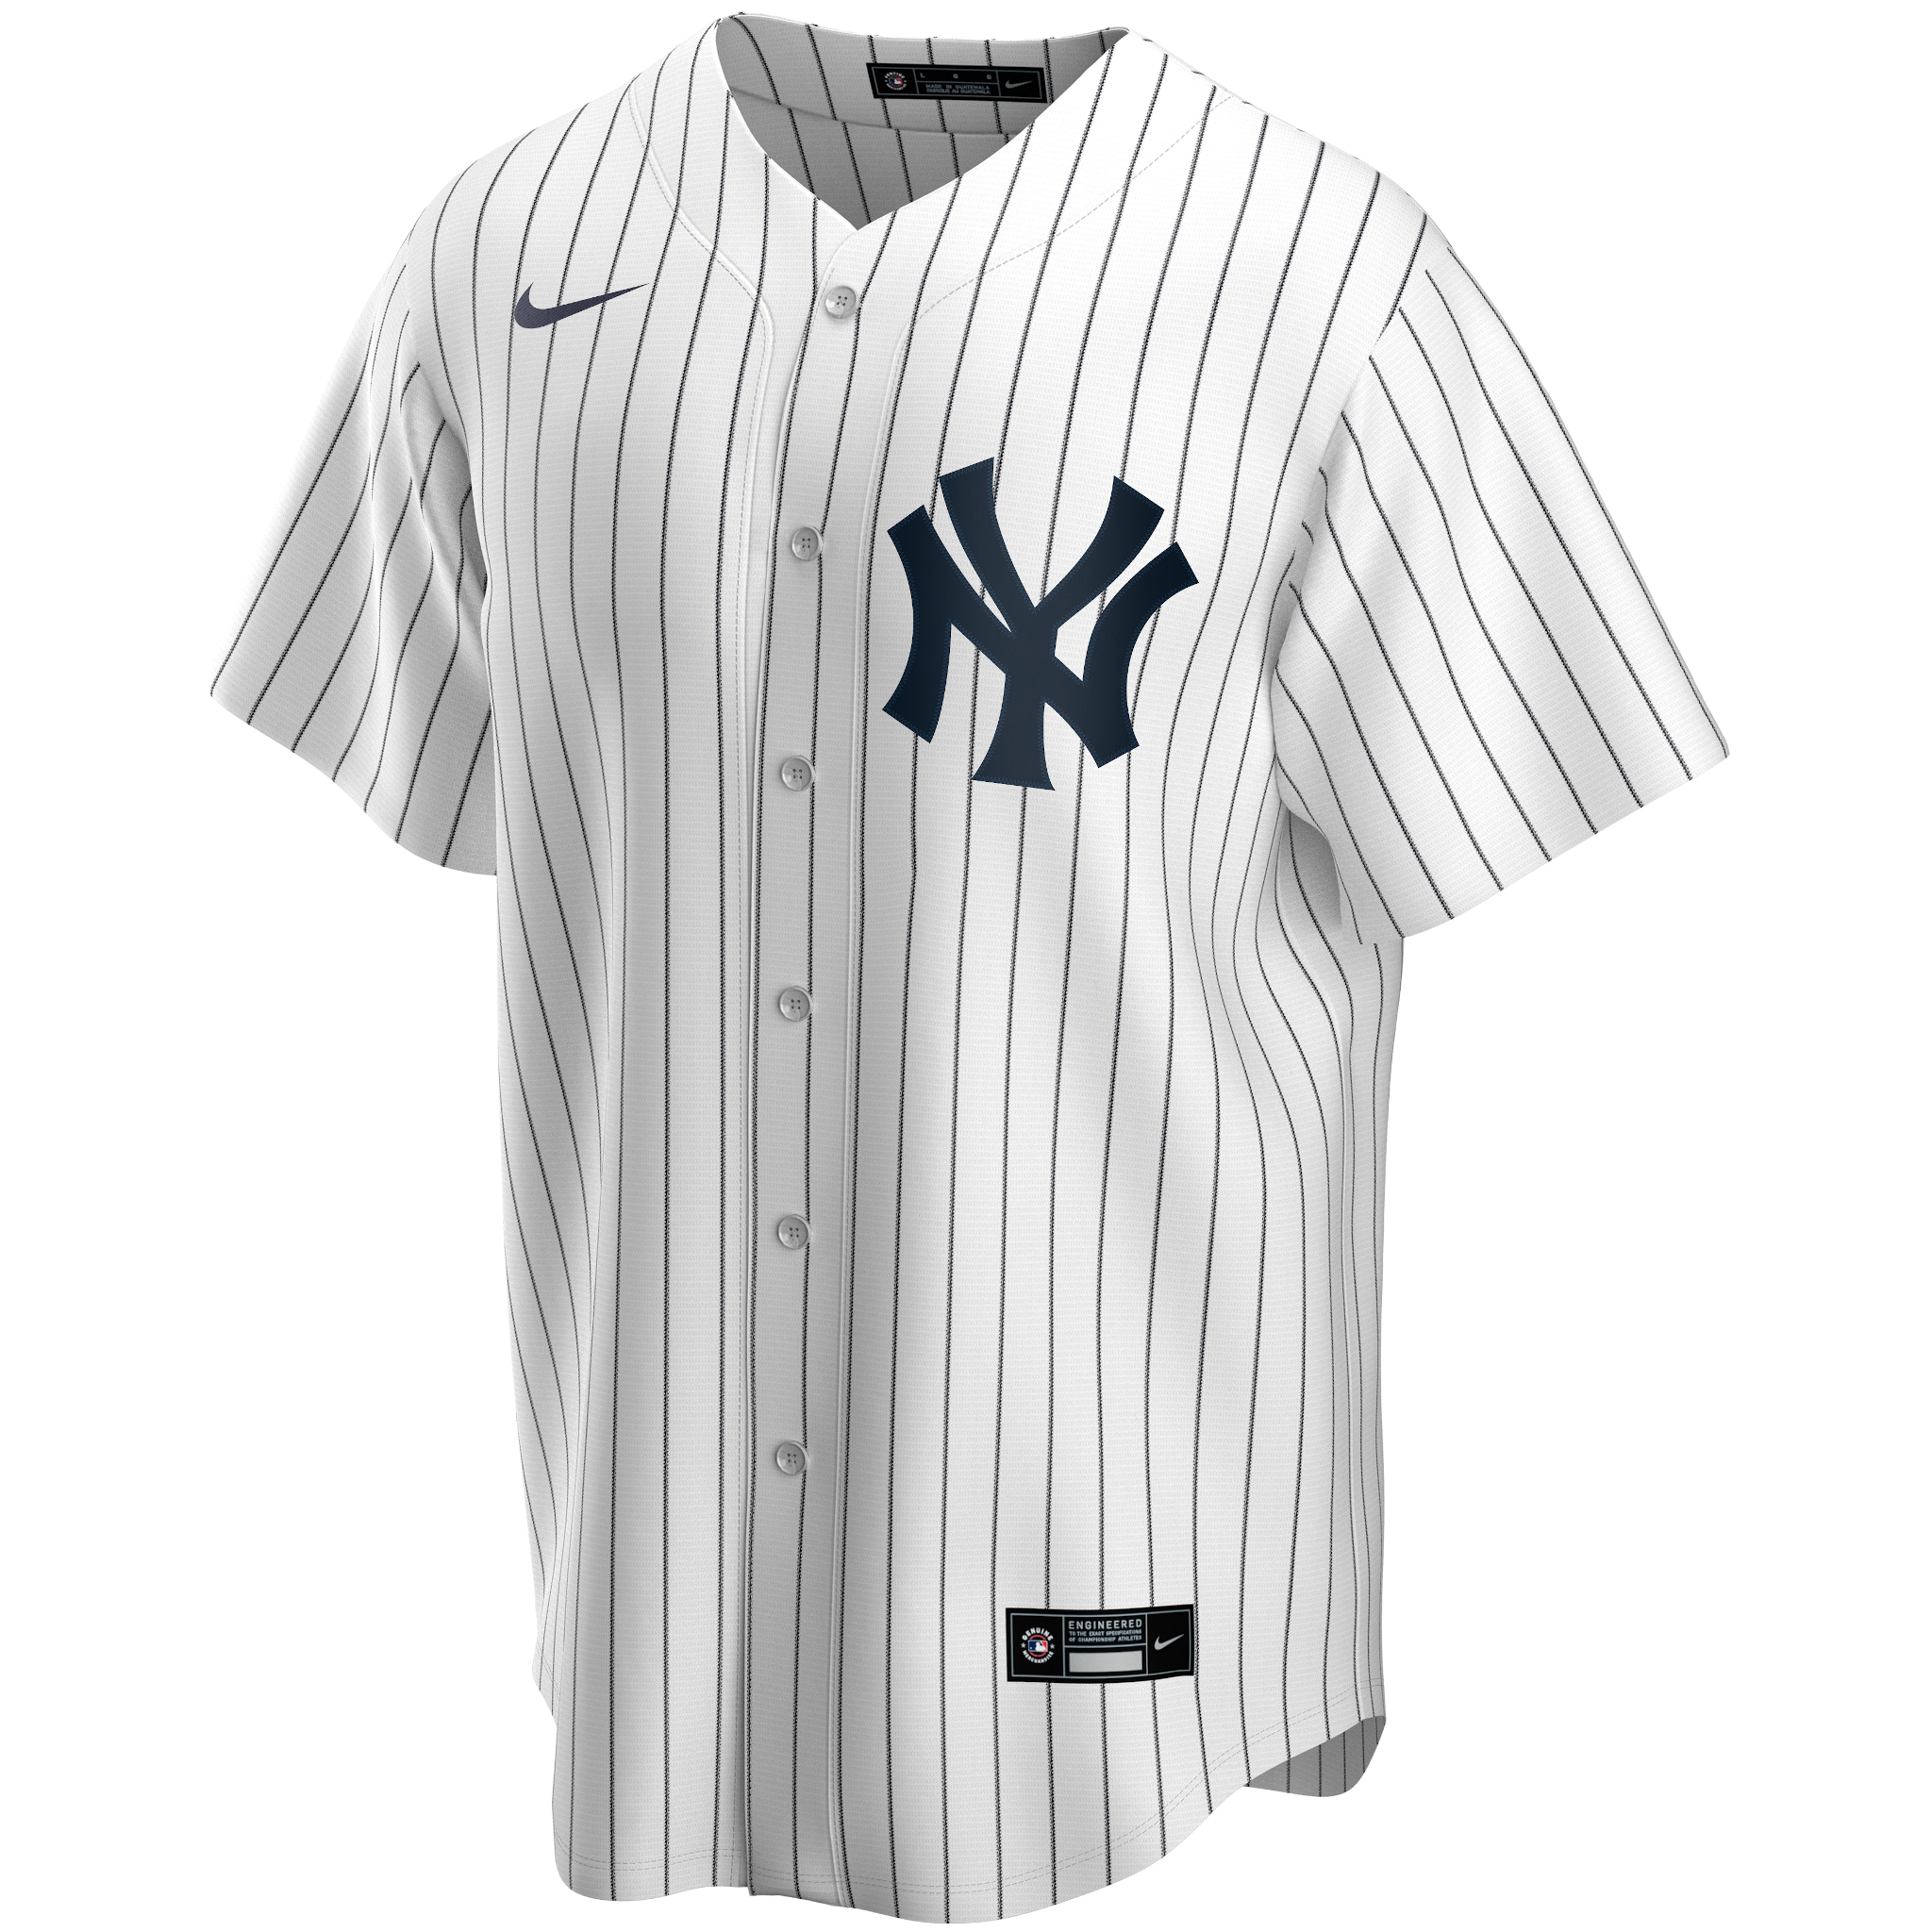 Lids Isiah Kiner-Falefa New York Yankees Fanatics Authentic Game